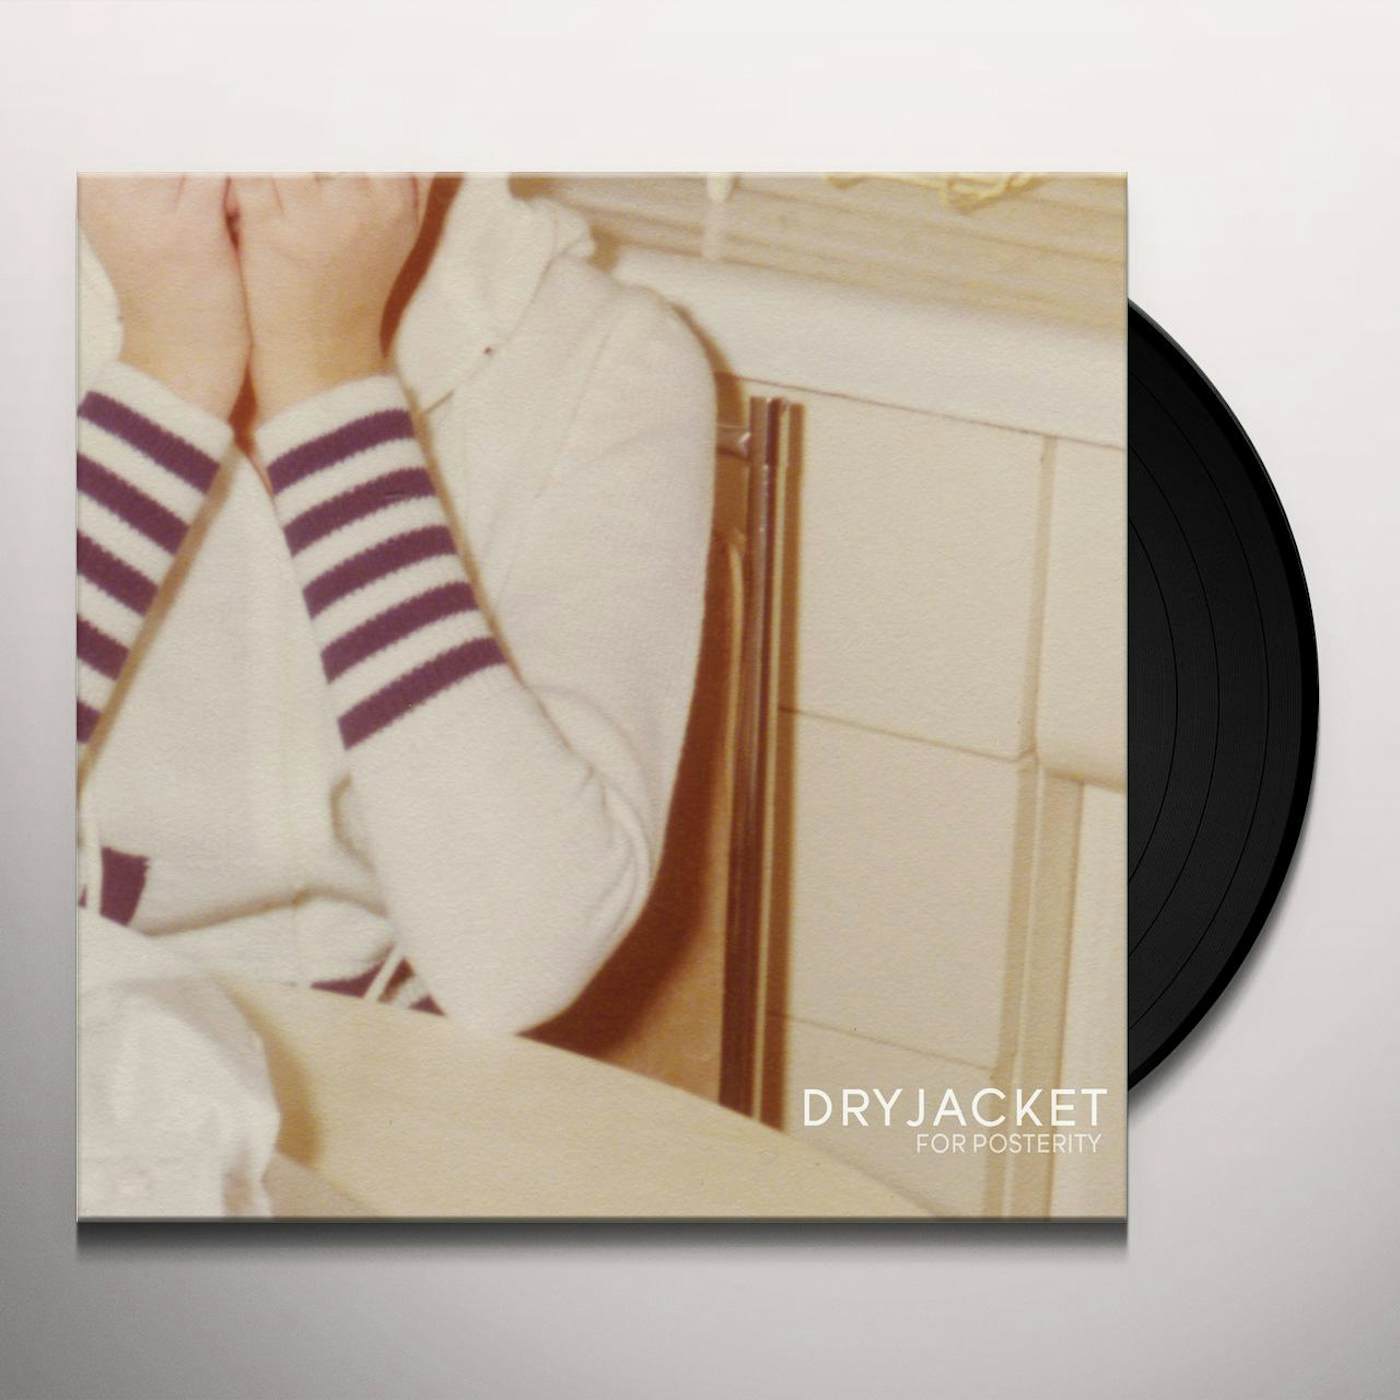 Dryjacket For Posterity Vinyl Record